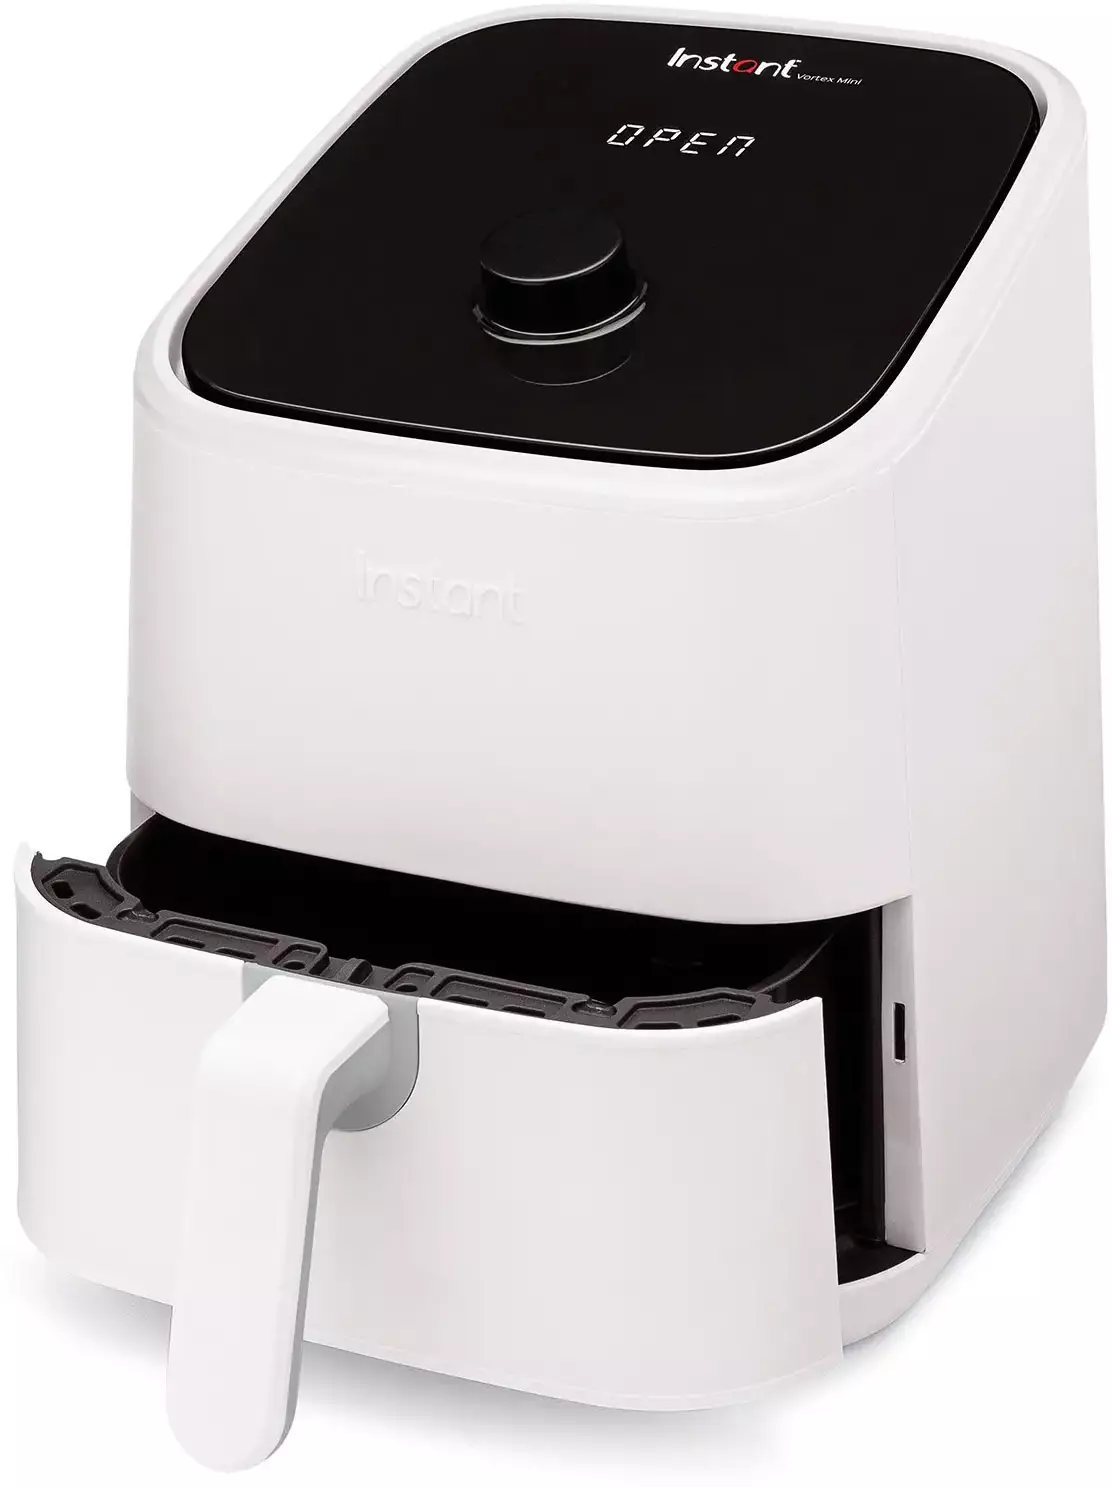 Instant Vortex Slim 6Qt Compact Air Fryer with Quiet Mark 